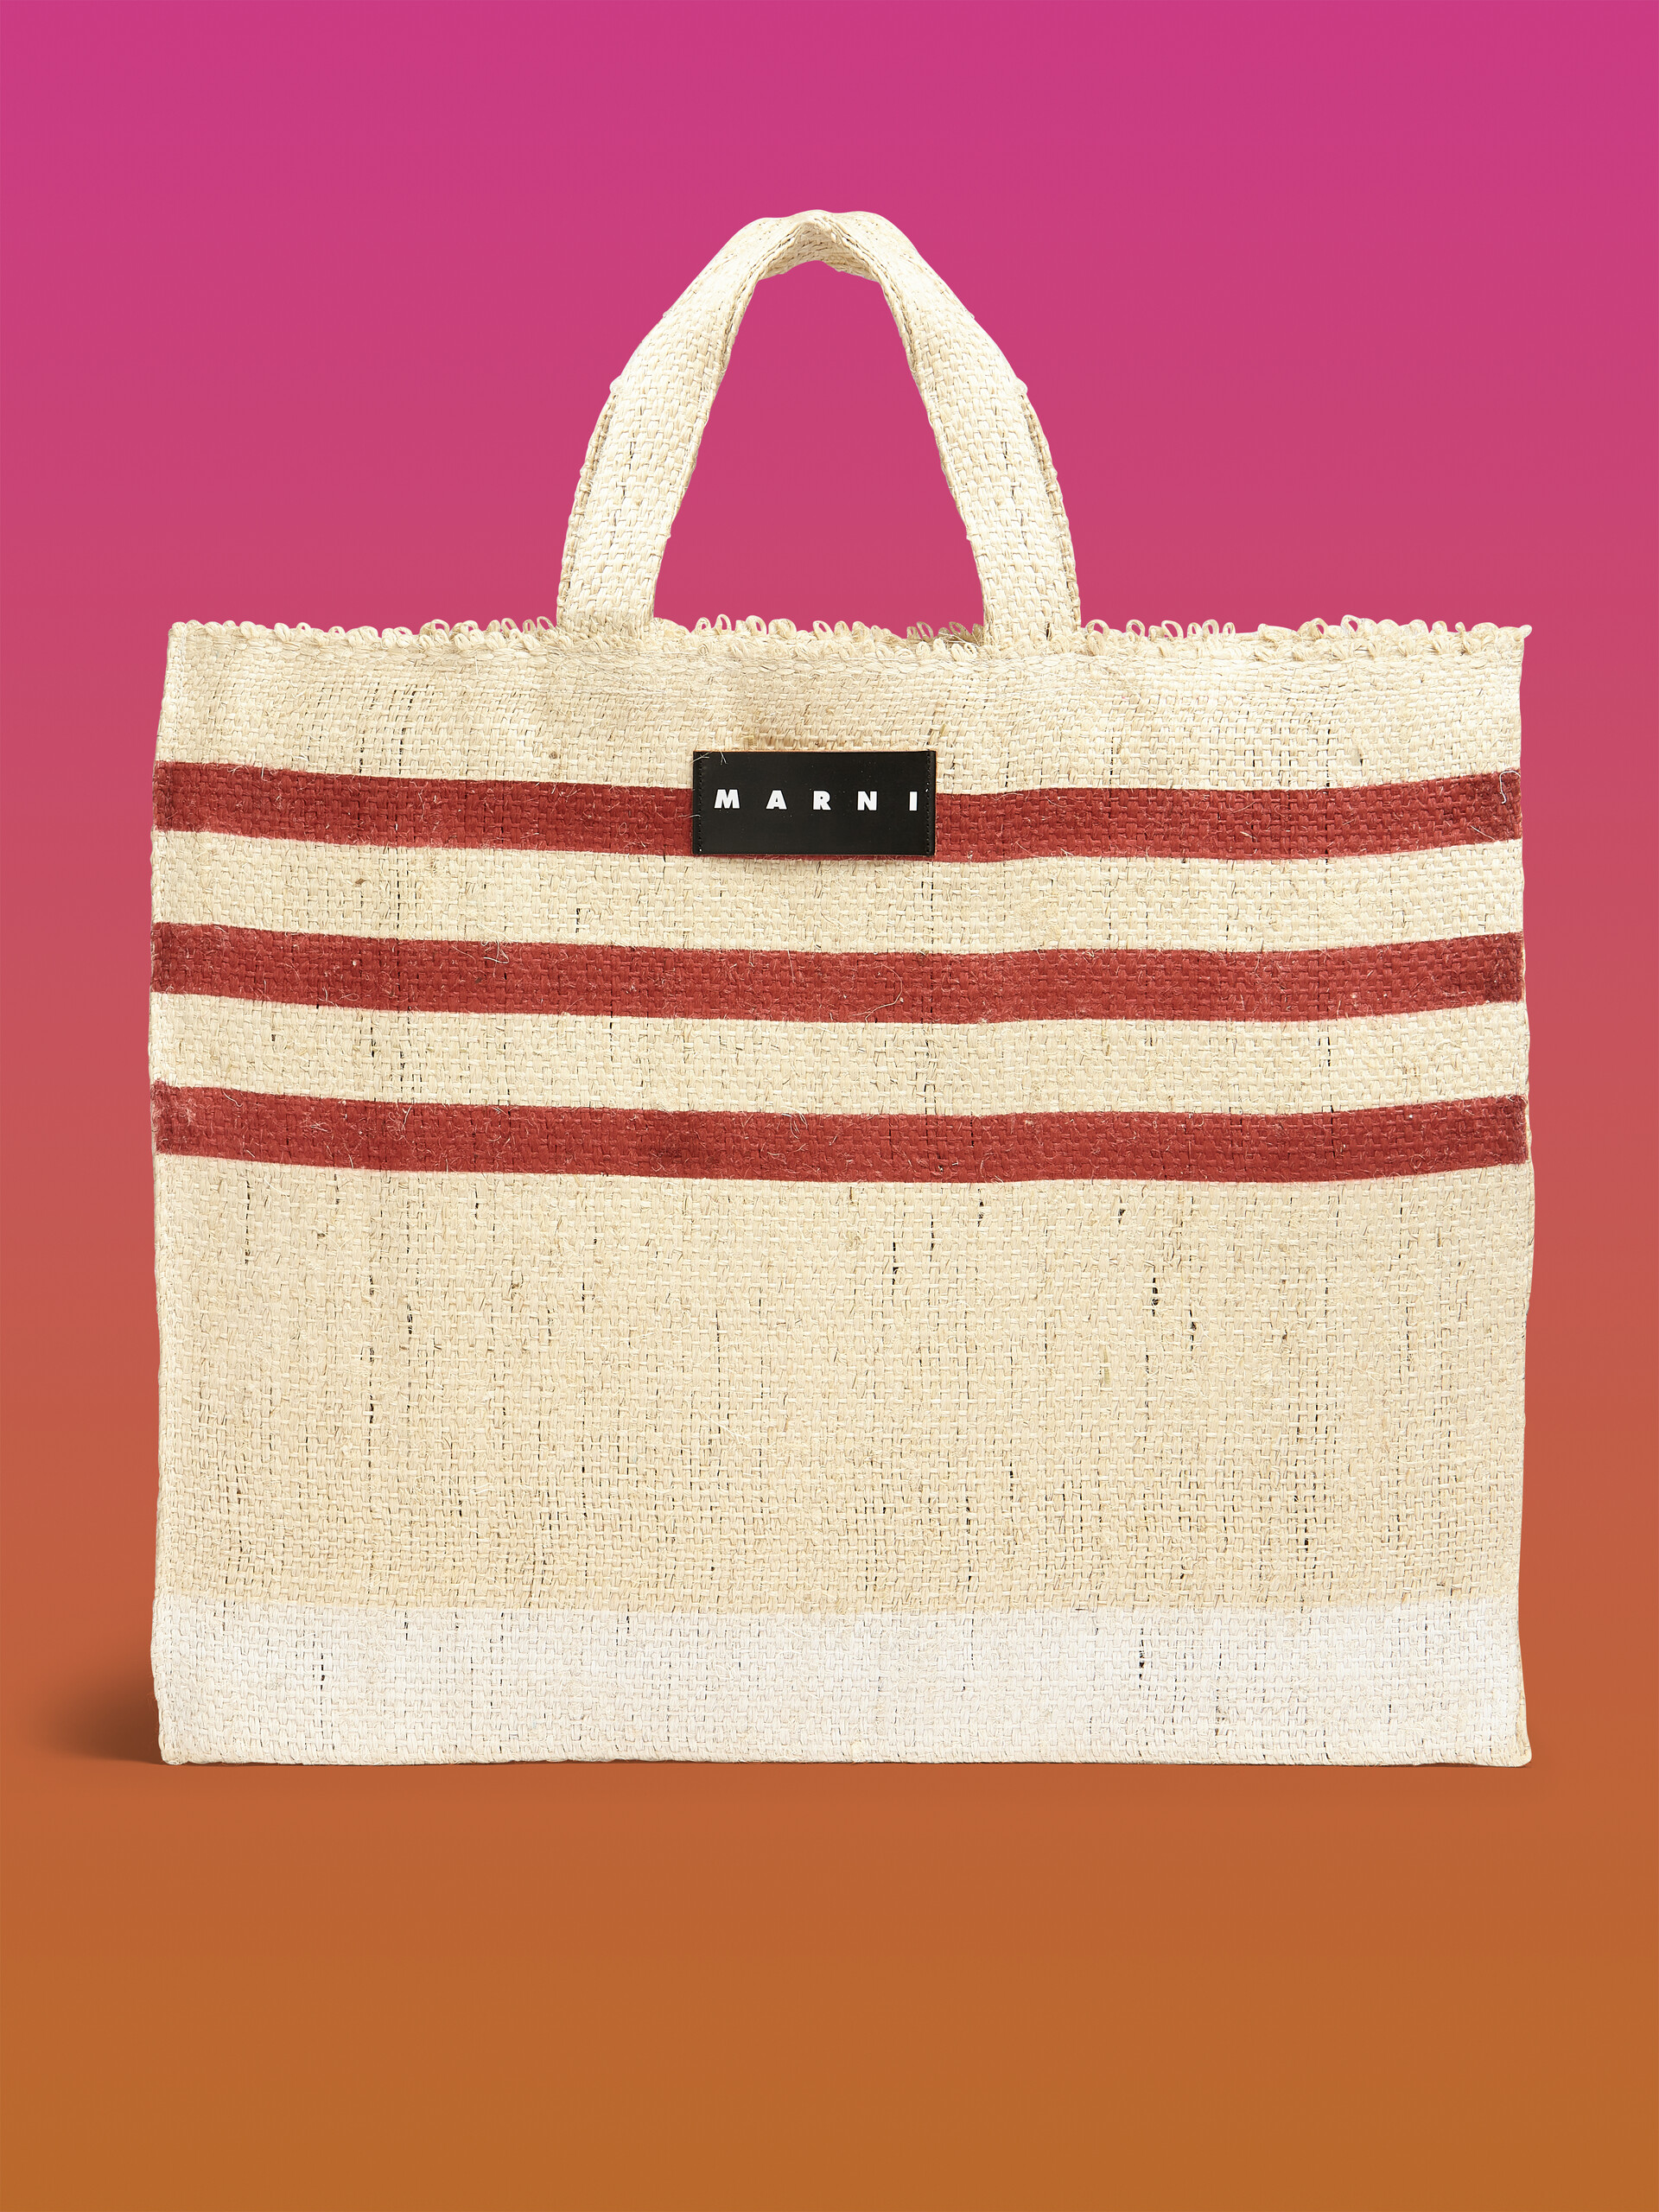 MARNI MARKET CANAPA large bag in red natural fiber - Shopping Bags - Image 1